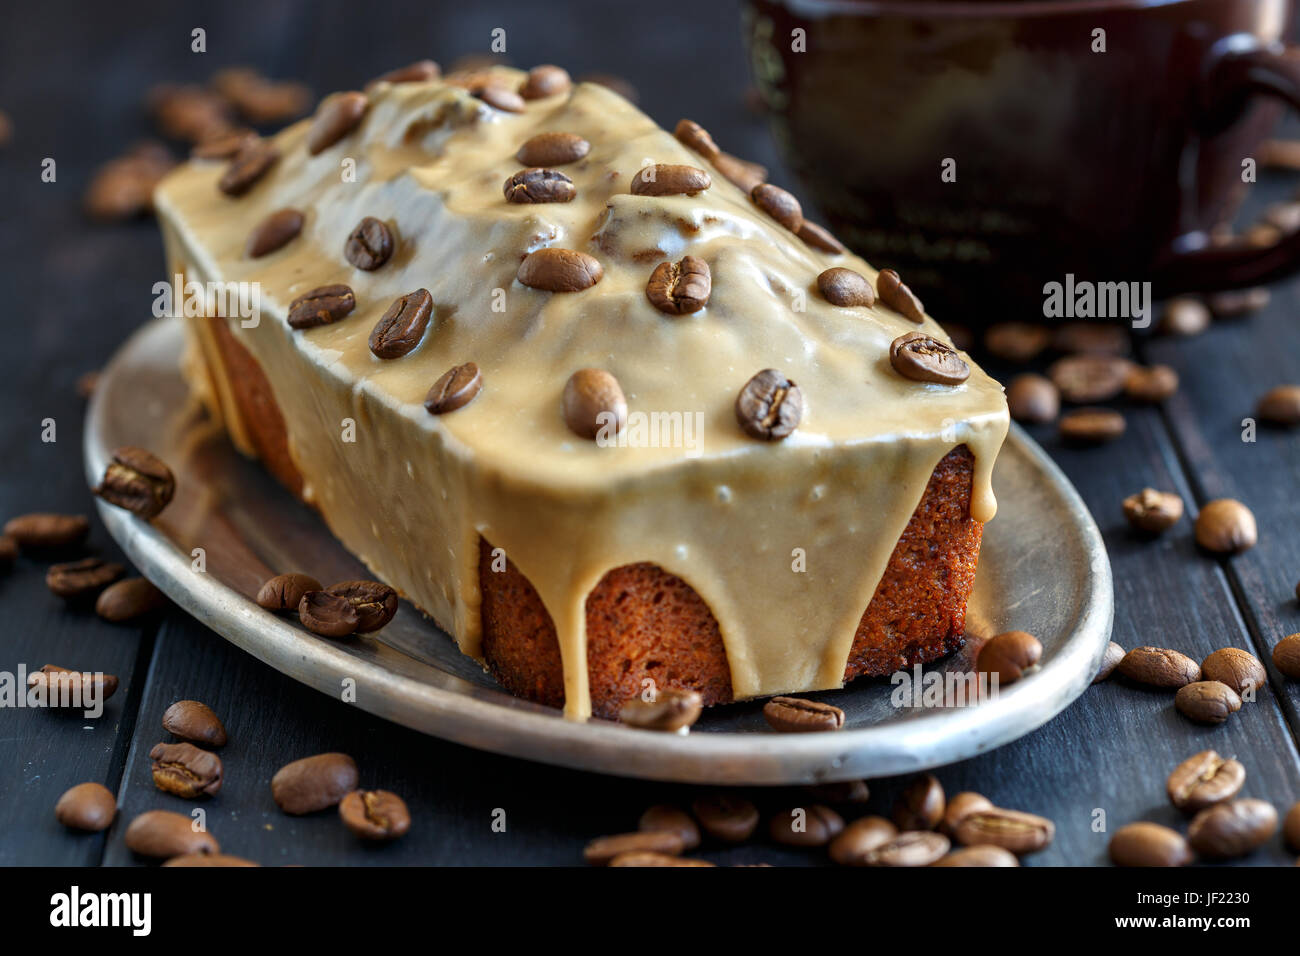 Homemade cake with coffee glaze. Stock Photo